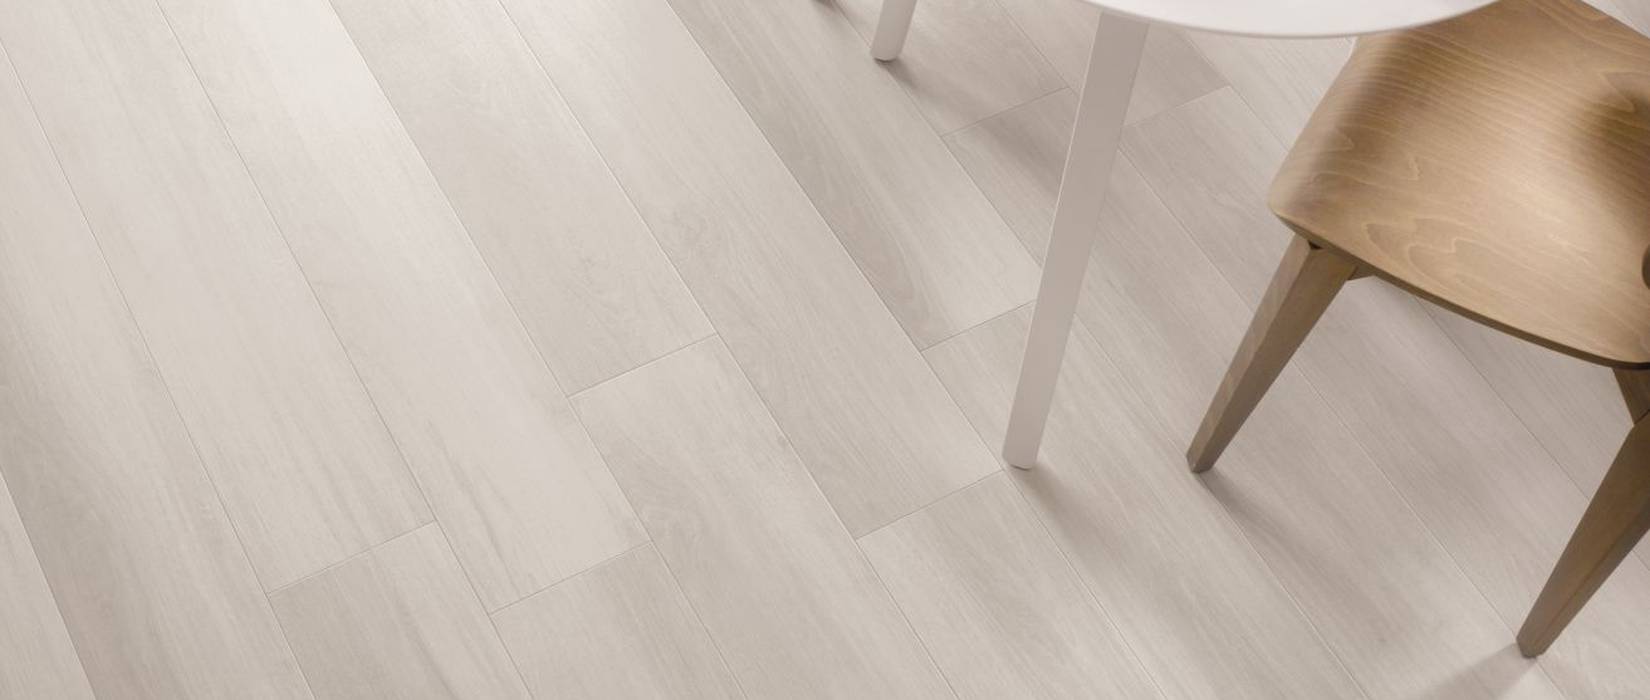 Wood effect stoneware floors